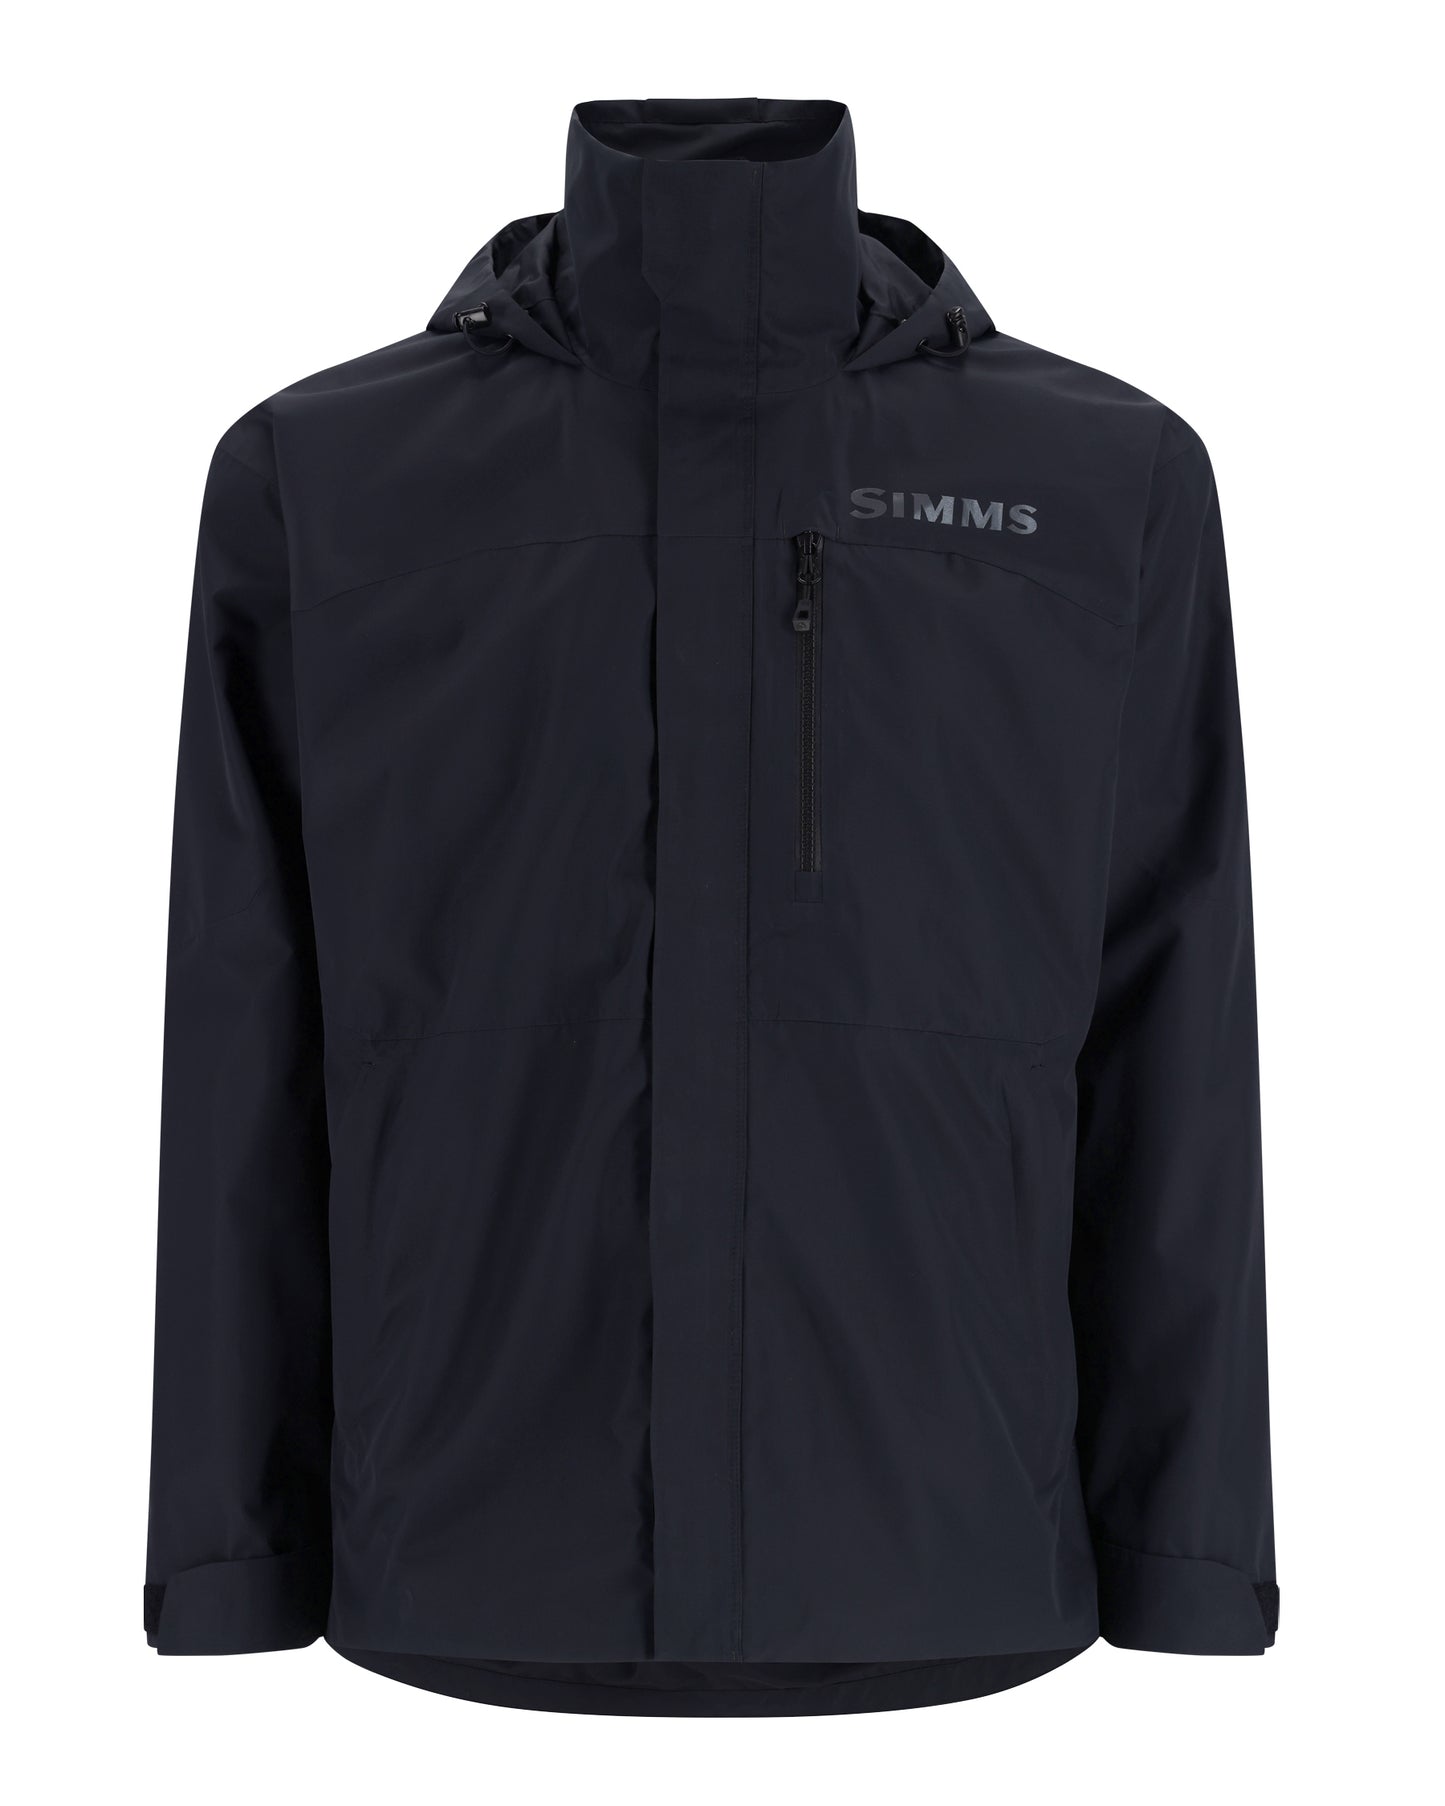 13675-001-simms-challenger-jacket